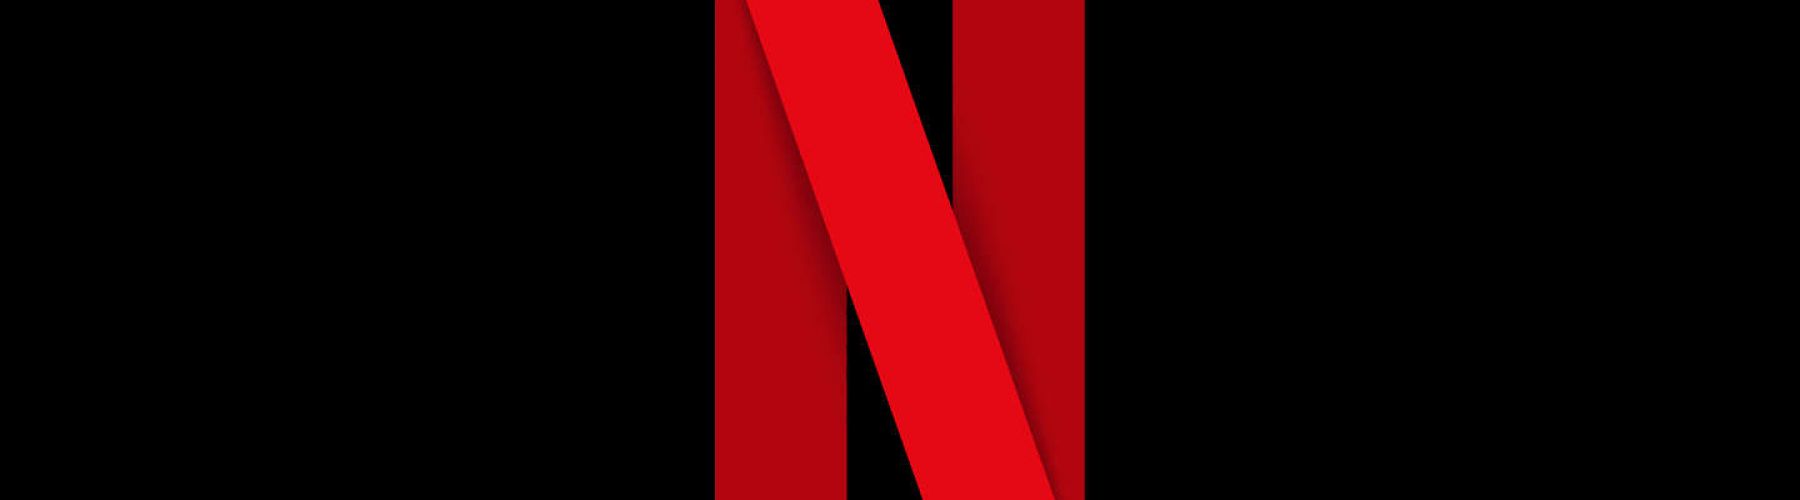 "International content critical to Netflix's continued success"